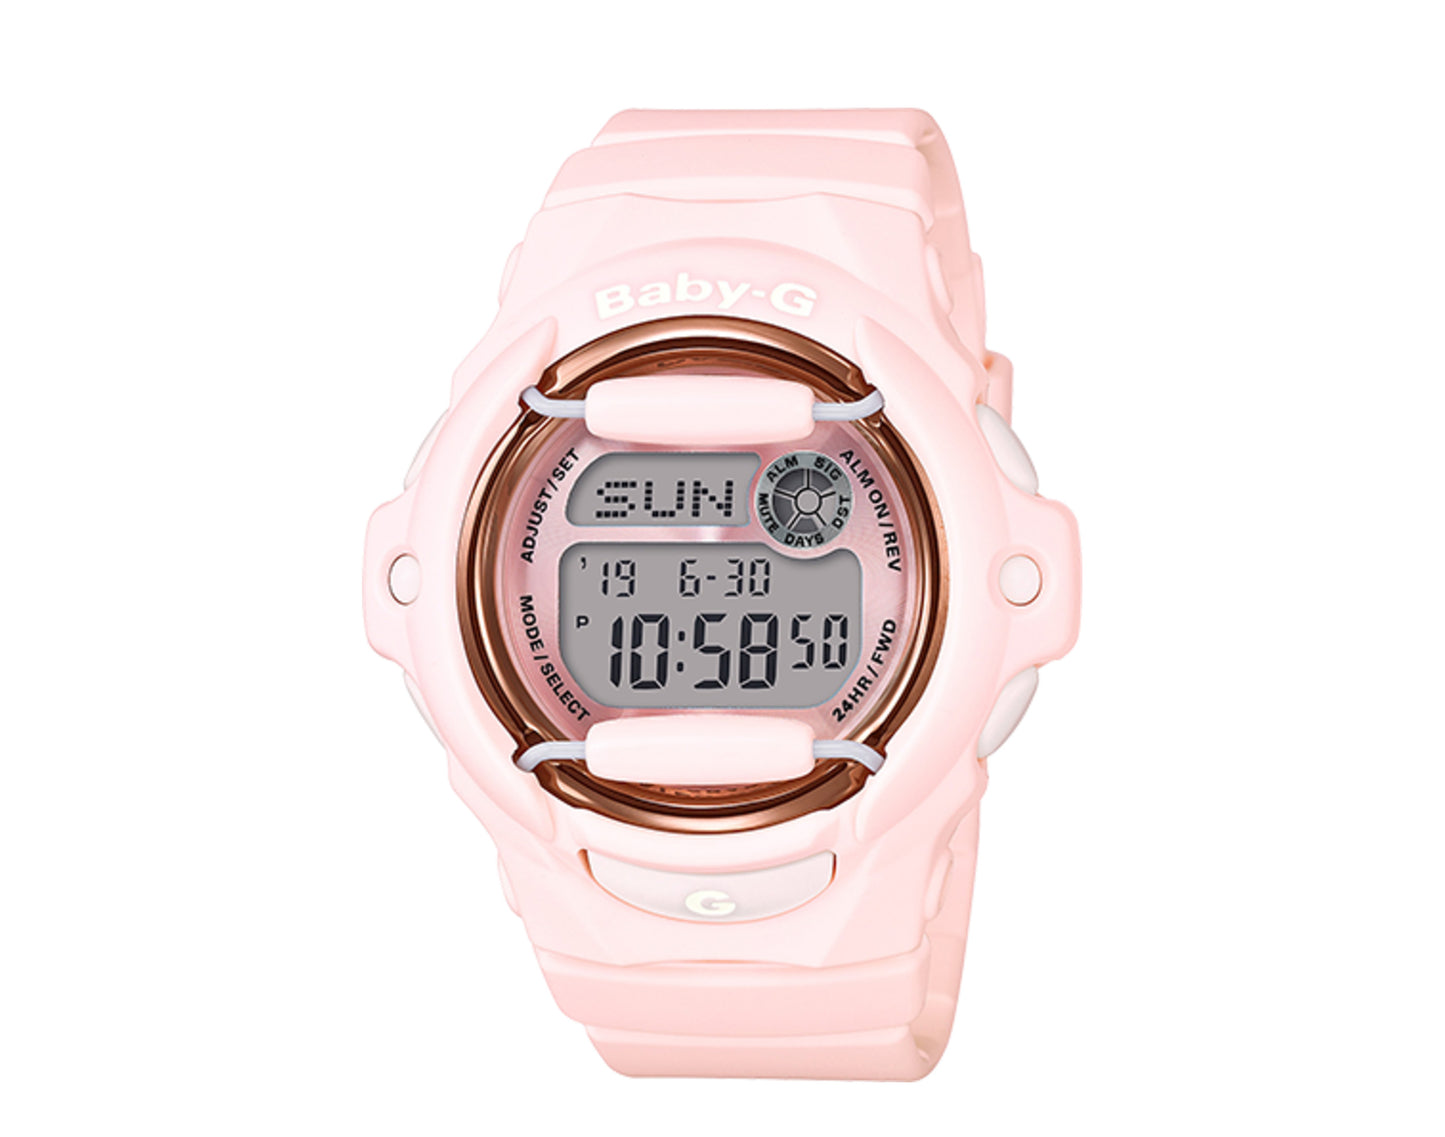 Casio G-Shock Baby-G BG169 Digital Resin Pink/Rose Gold Women's Watch BG169G-4B